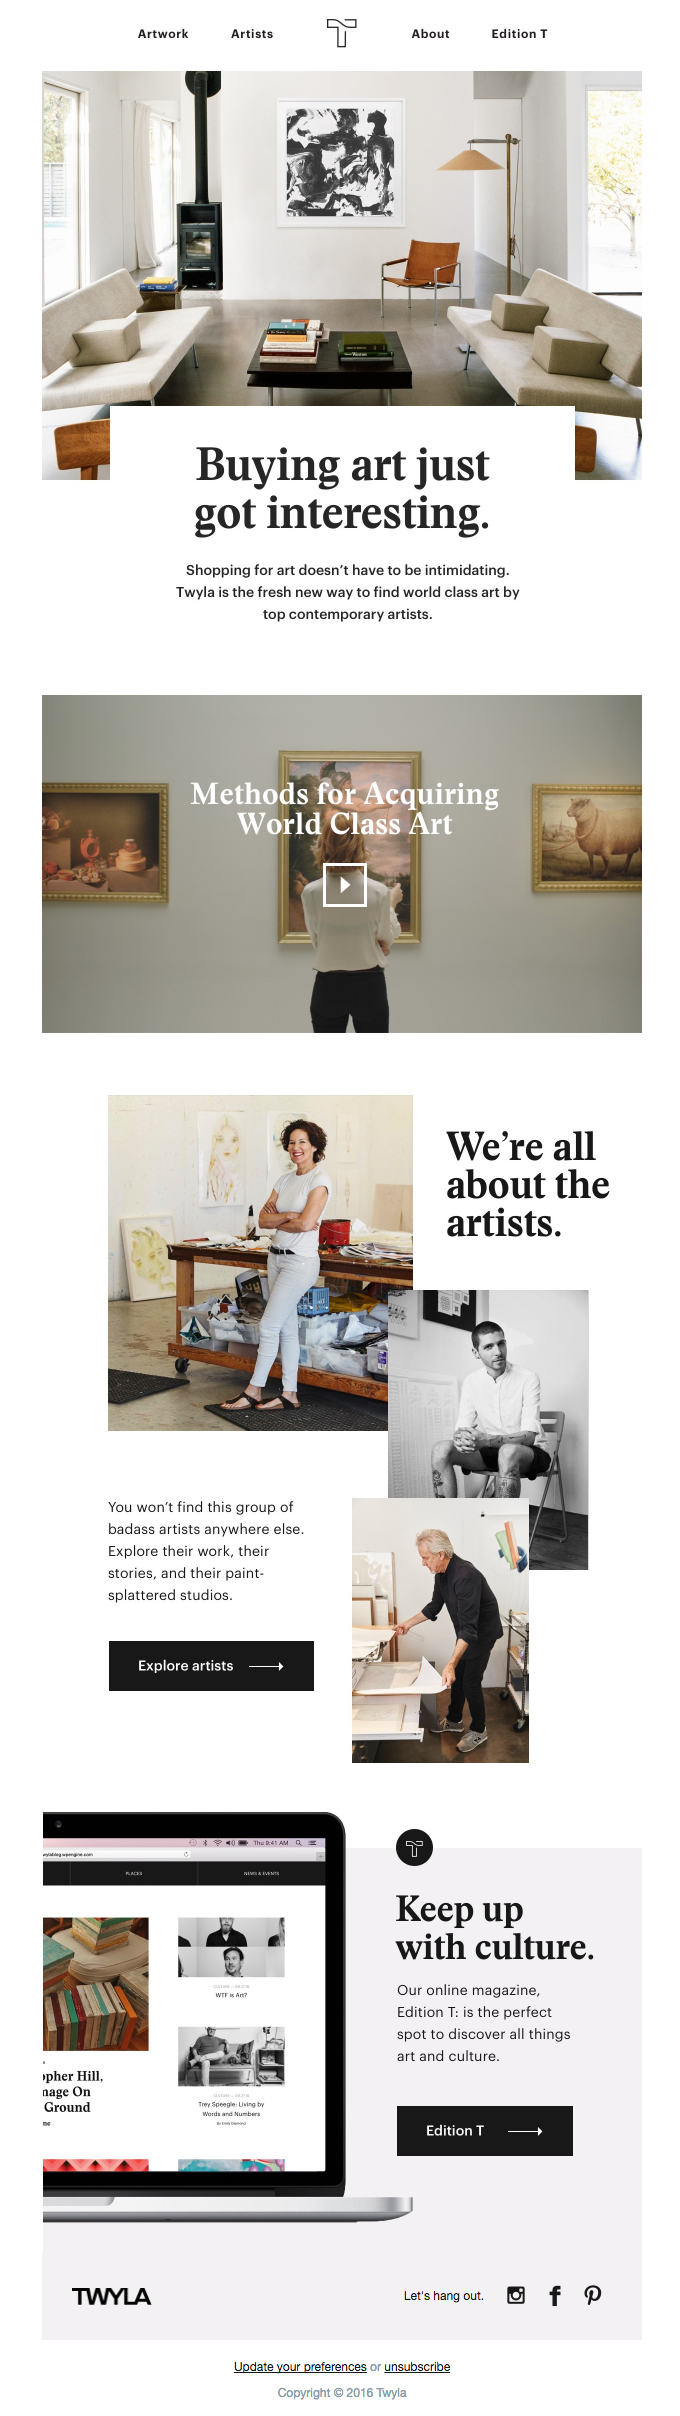 Meet Twyla, a new way to buy art.